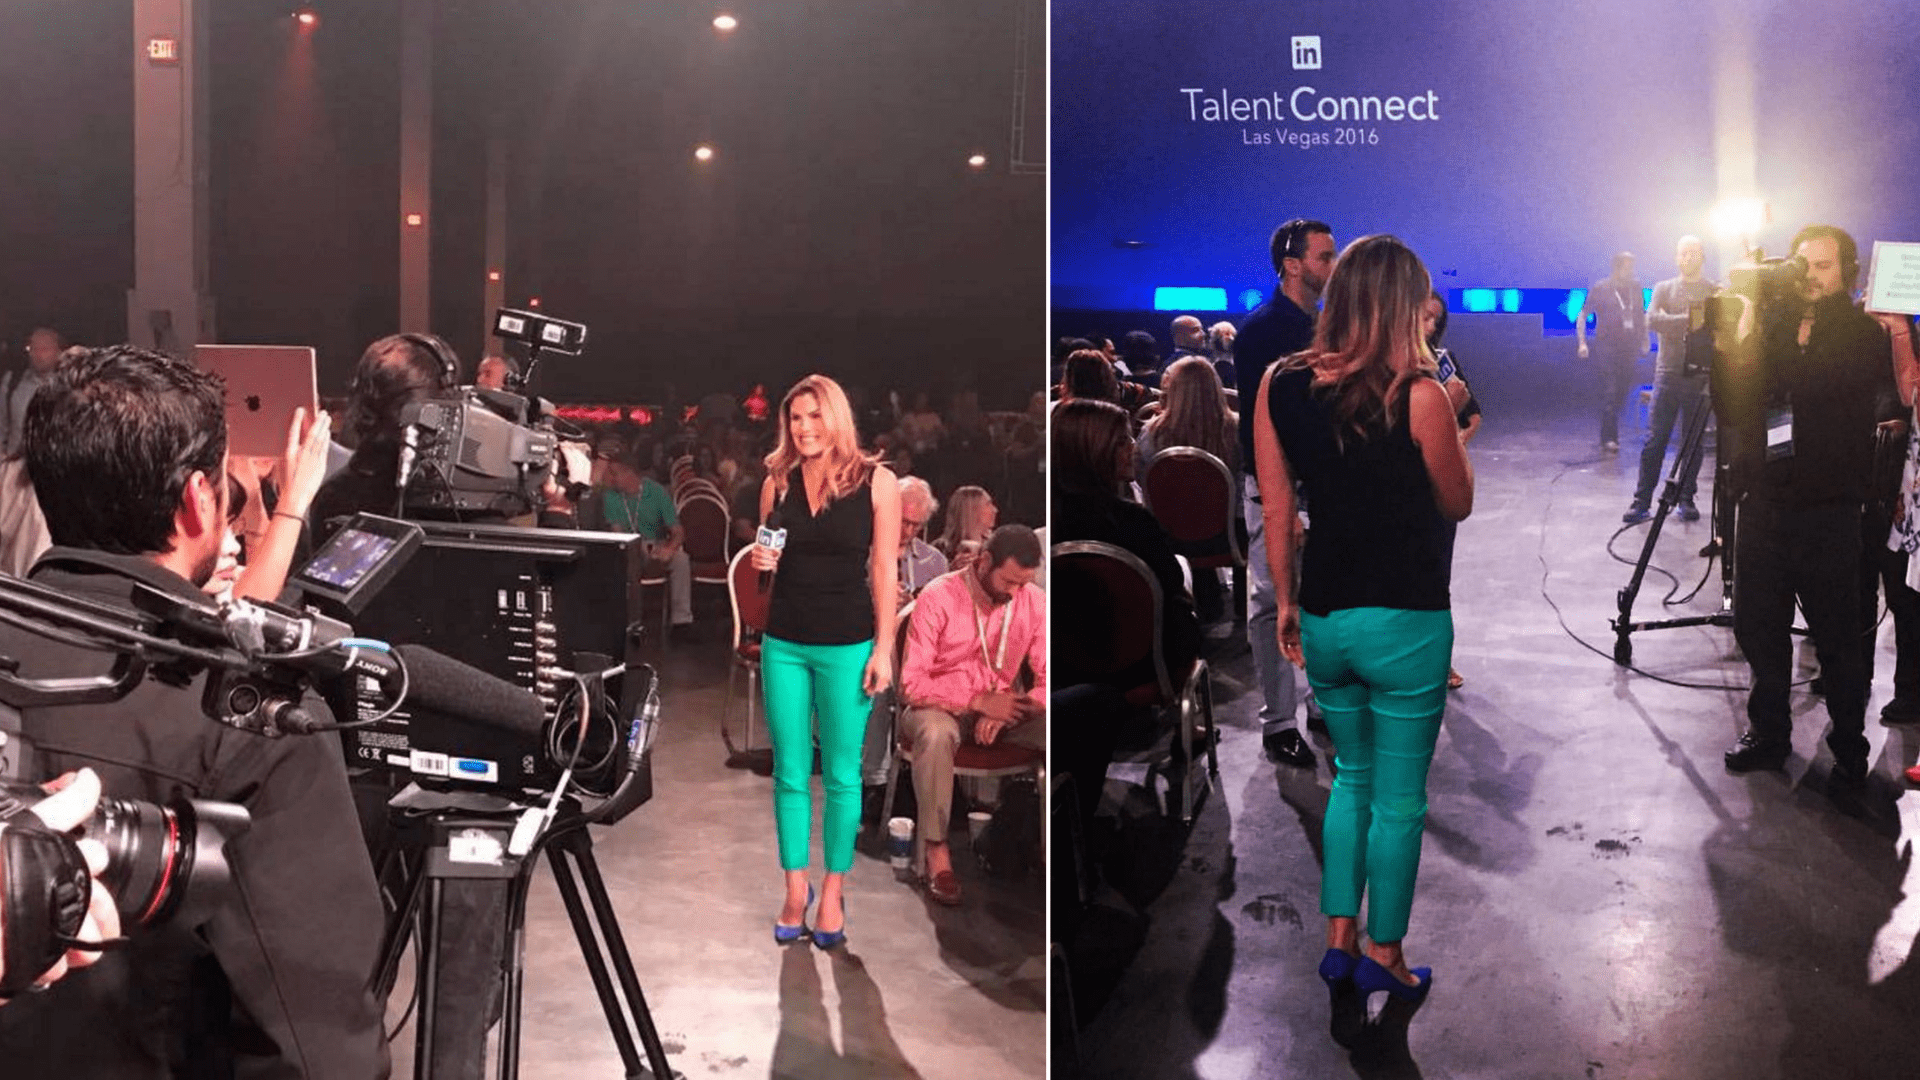 Maren Hogan Presents LinkedIn Talent Connect in Vegas 2016